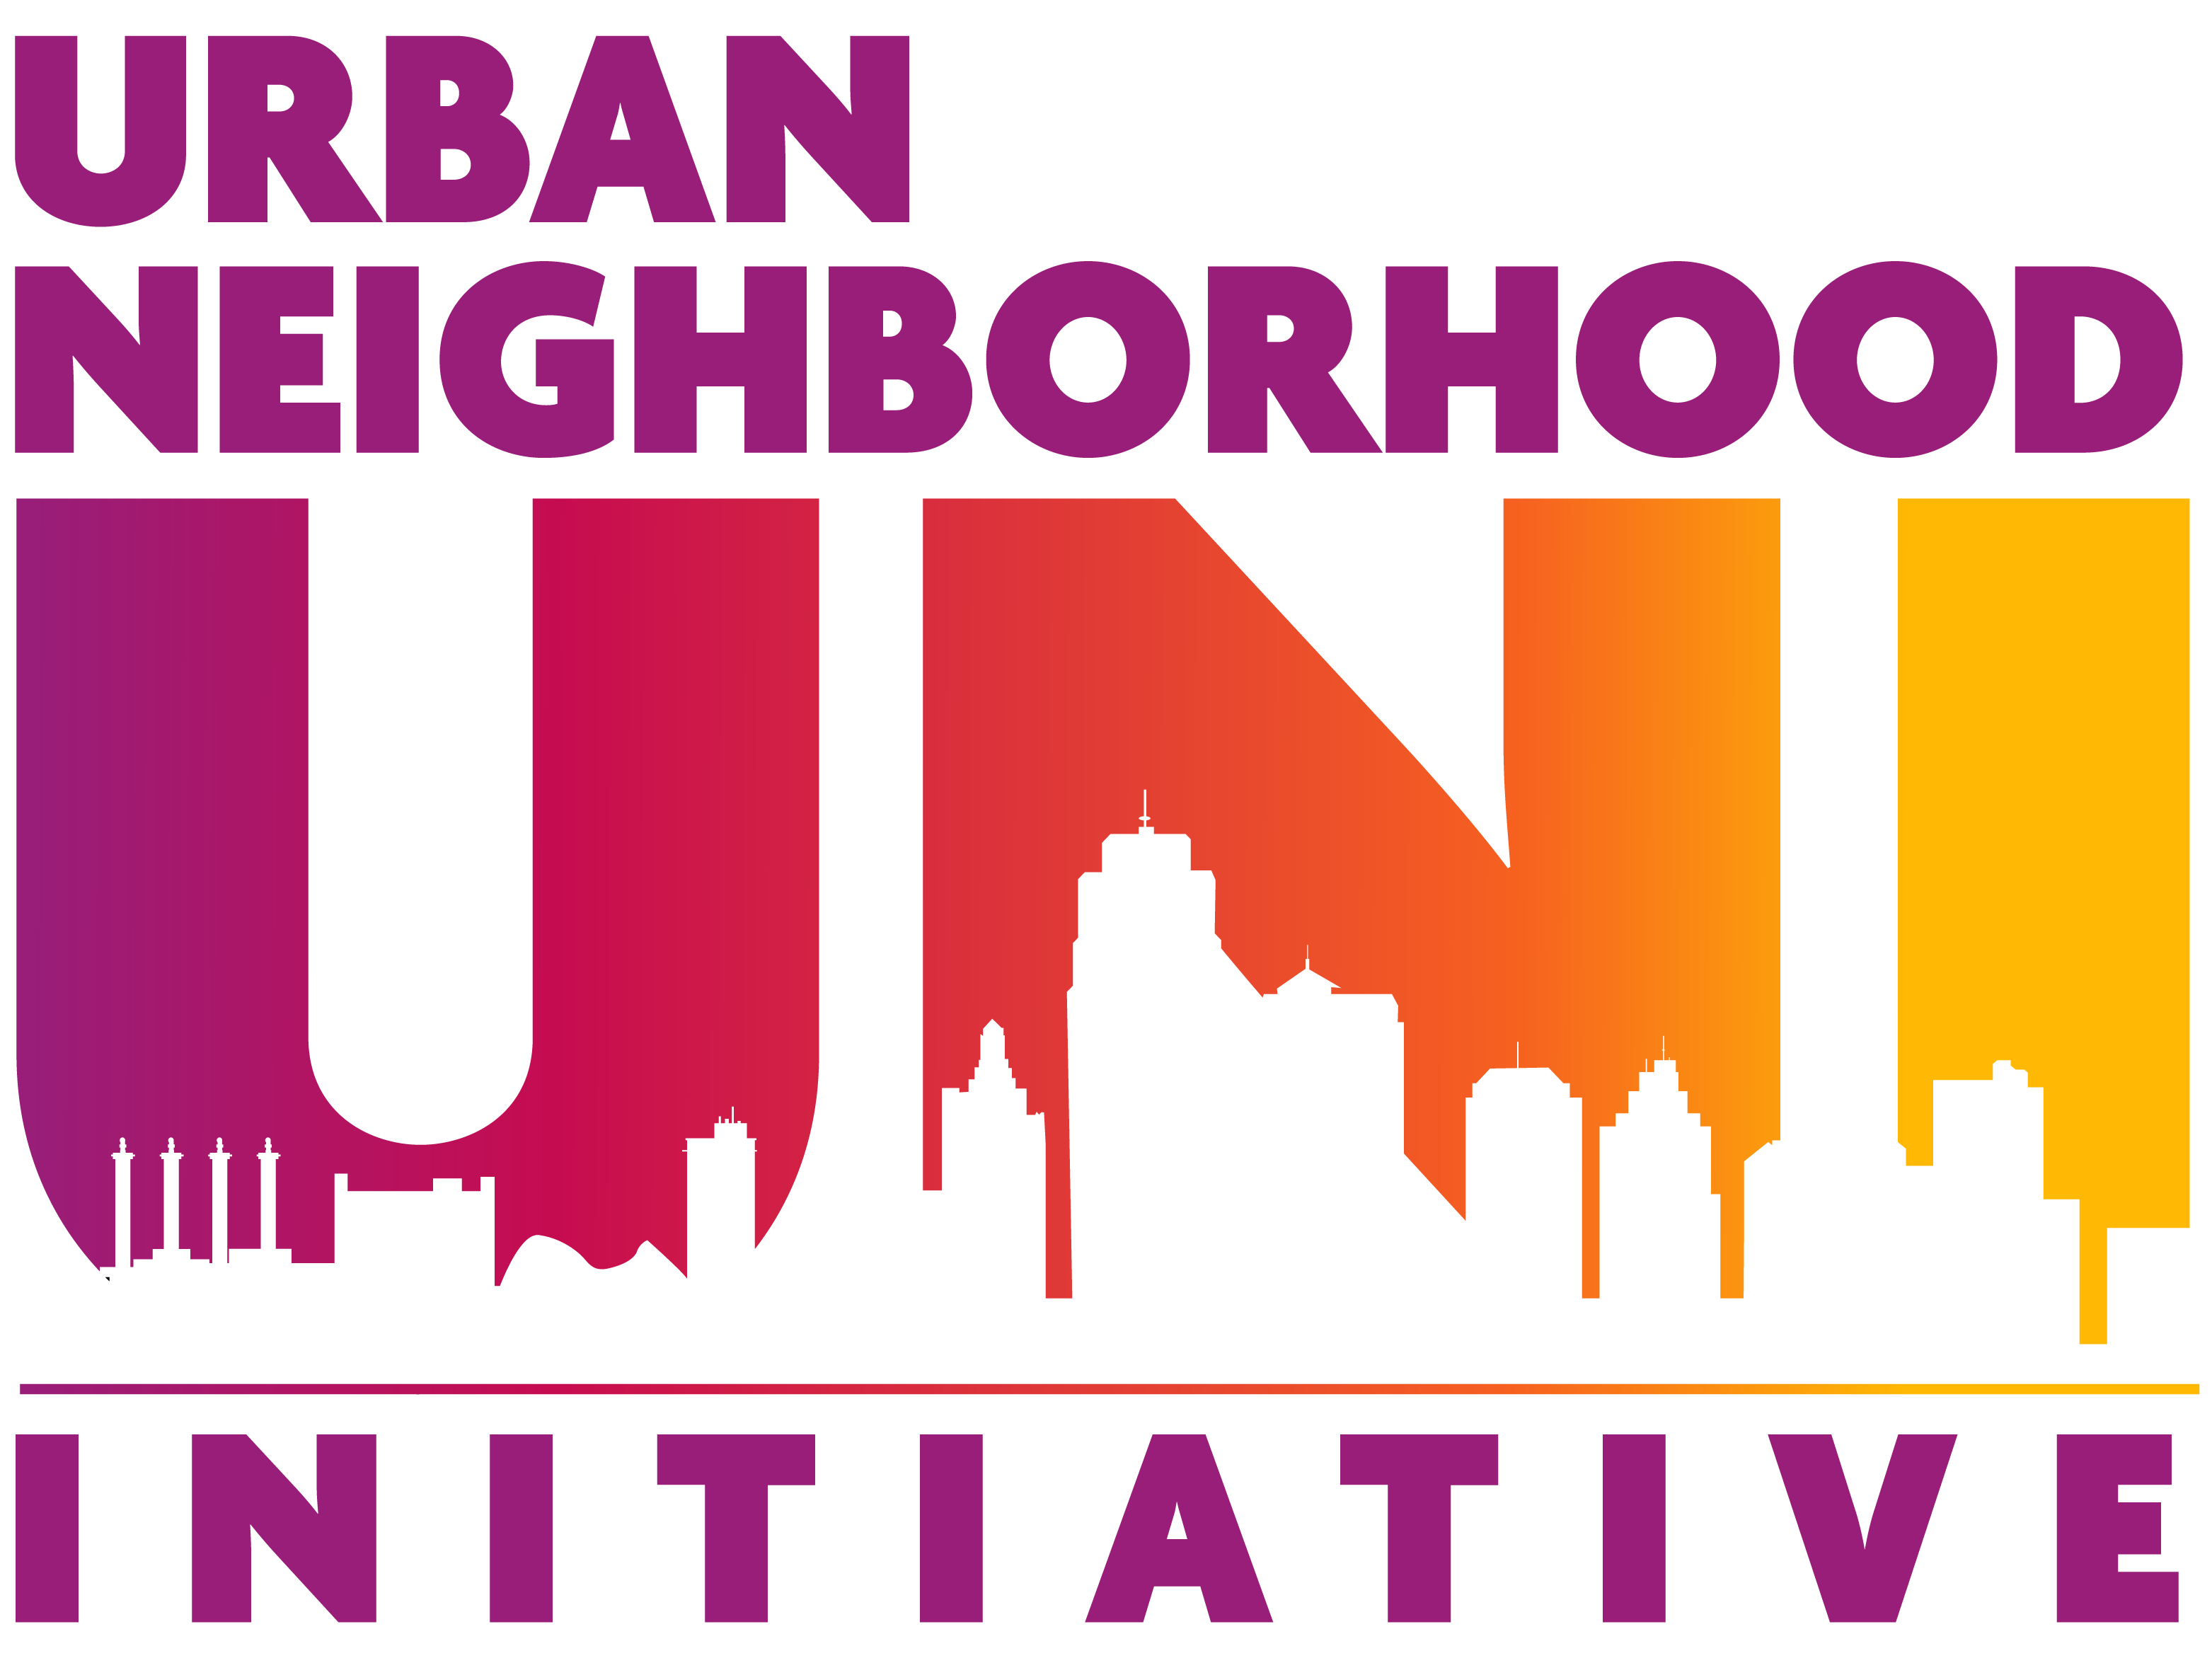 Urban Neighborhood Initiative